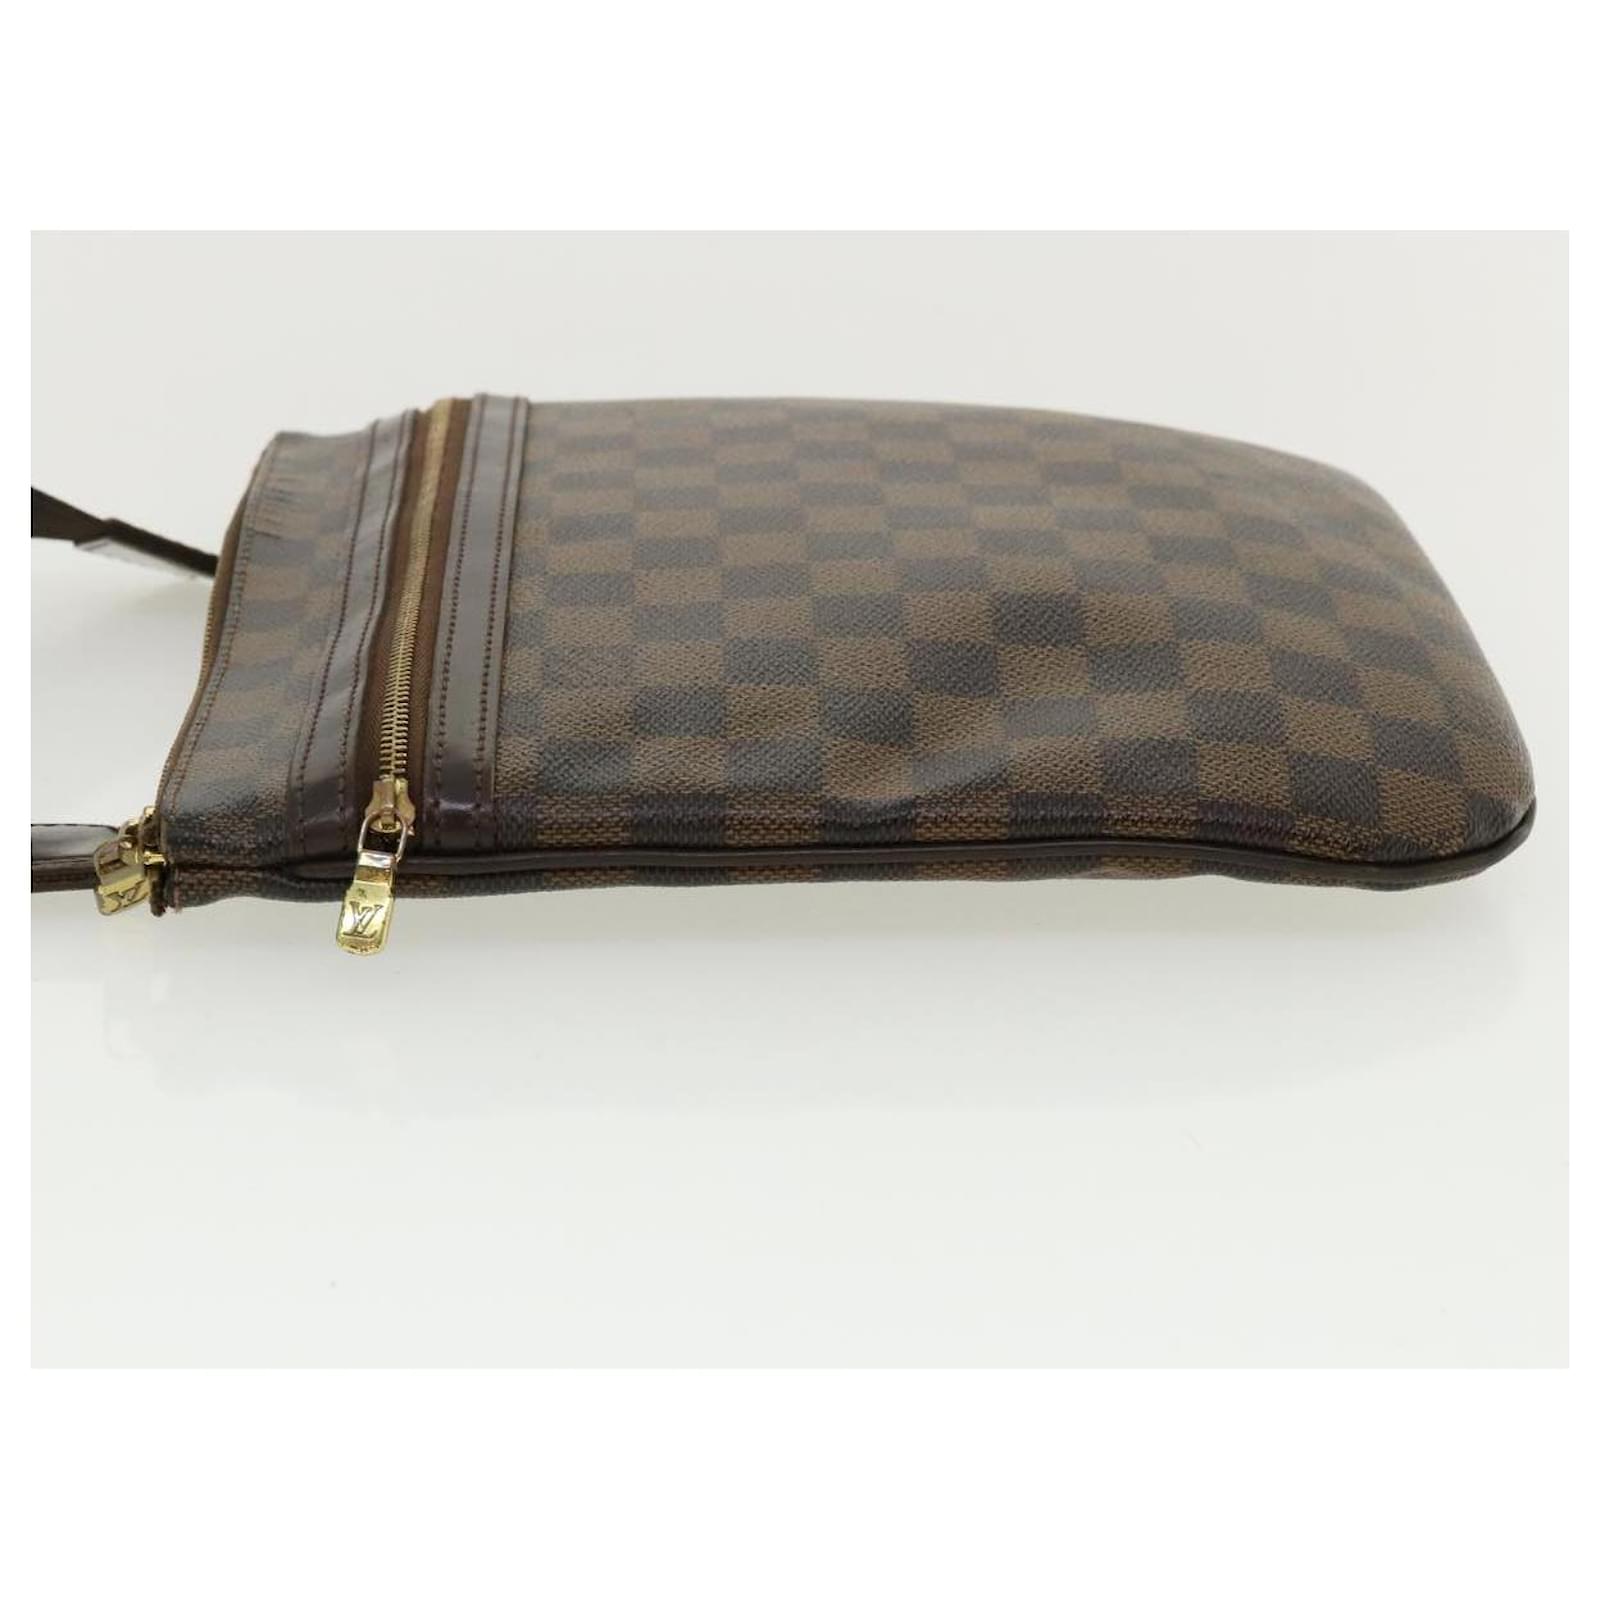 Auth Louis Vuitton Damier Pochette Bosphore Shoulder Bag N51111 Ebene Brown  [Use